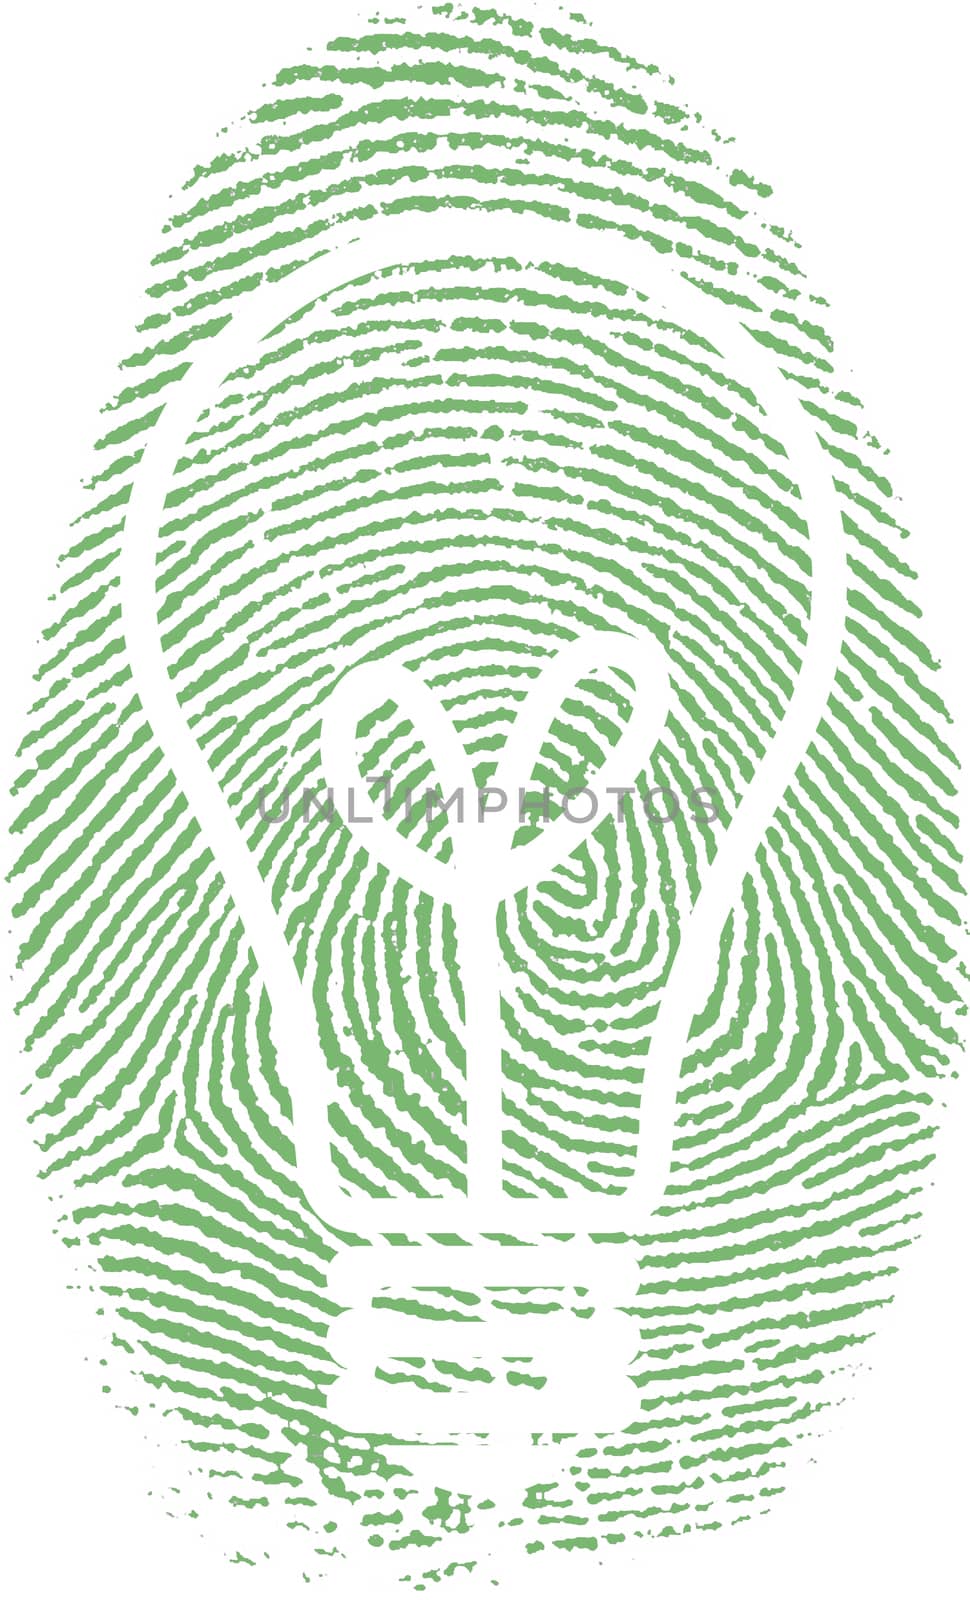 Fingerprint with bulb silhouette by applesstock